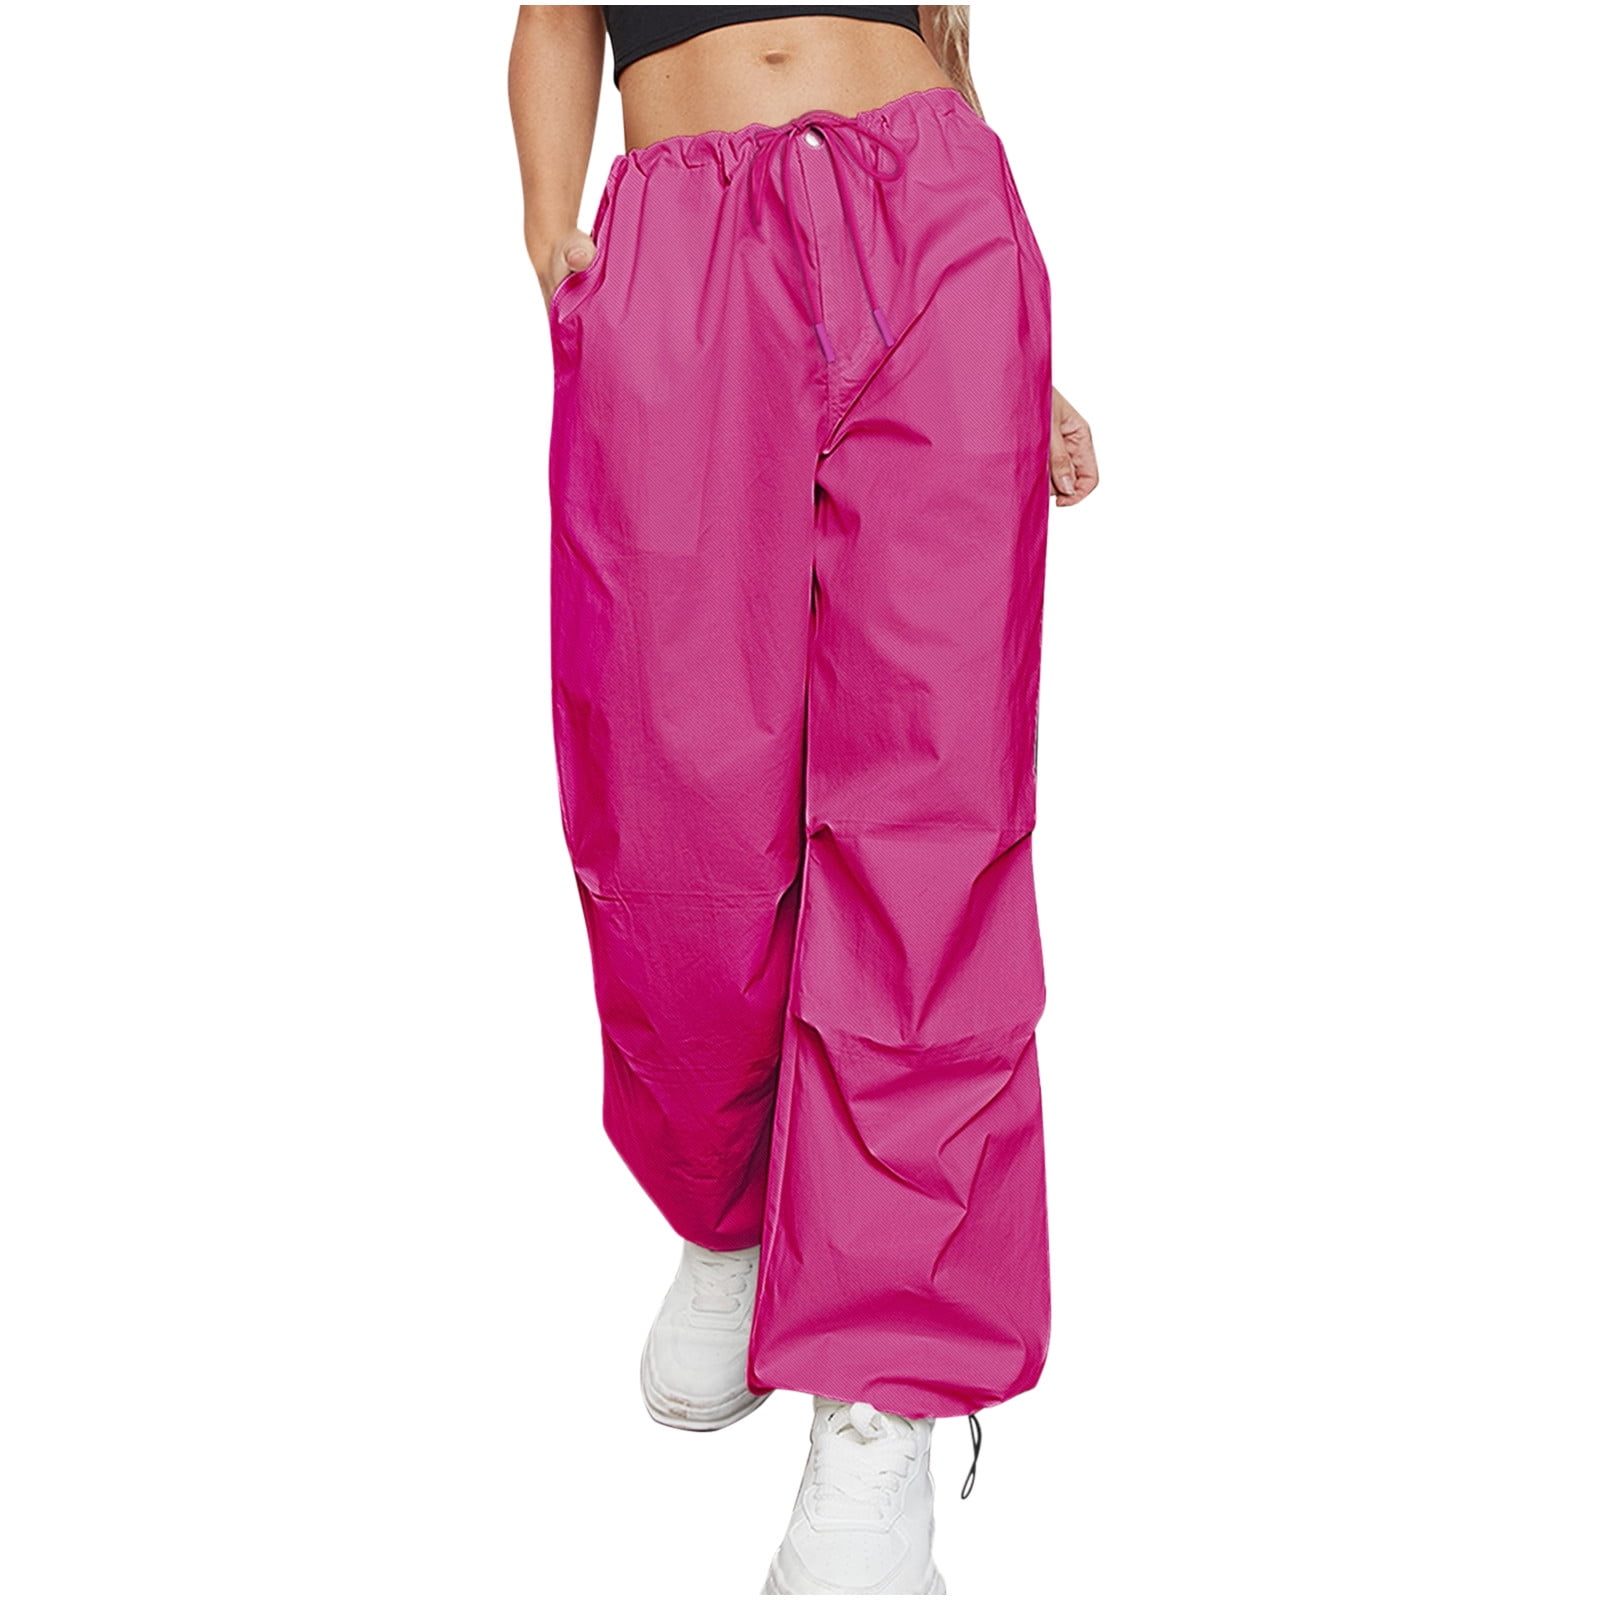 RYRJJ Women Baggy Low Waist Drawstring Cargo Pants Oversize Casual Wide Leg  Parachute Trousers Pocket Jogger Sweatpants(Hot Pink,S) 